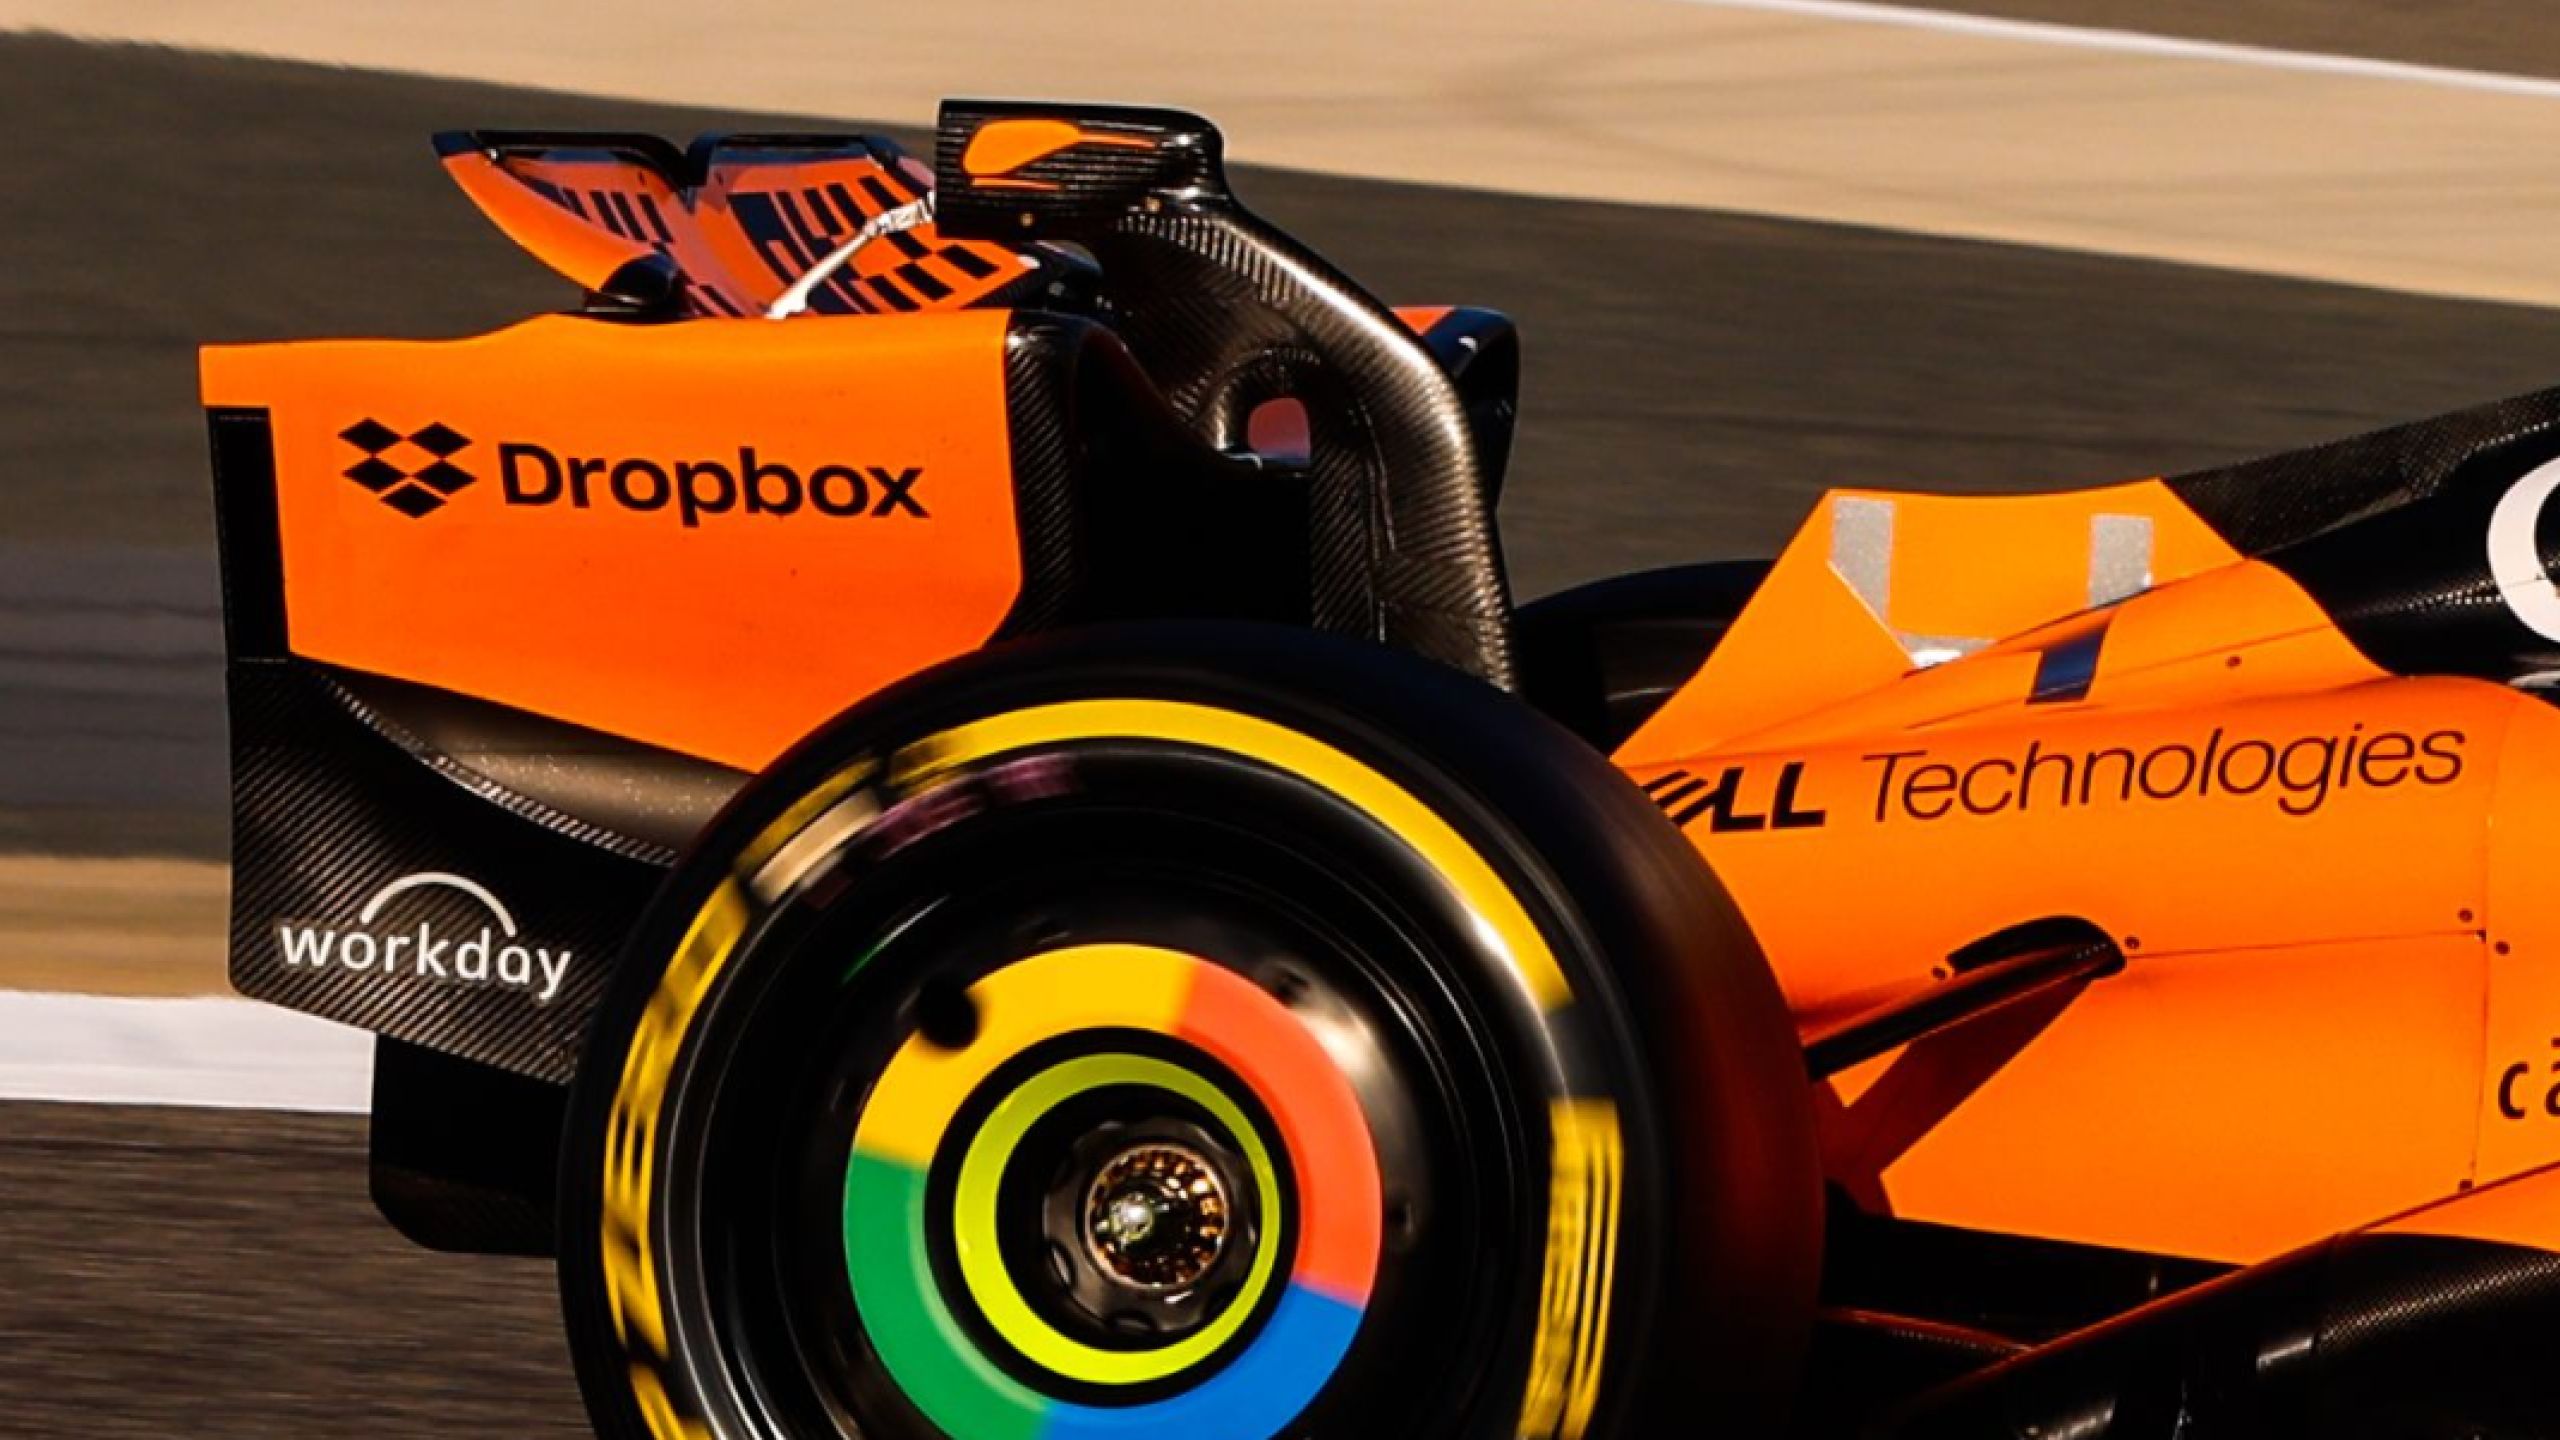 McLaren car with Dropbox logo on the back.